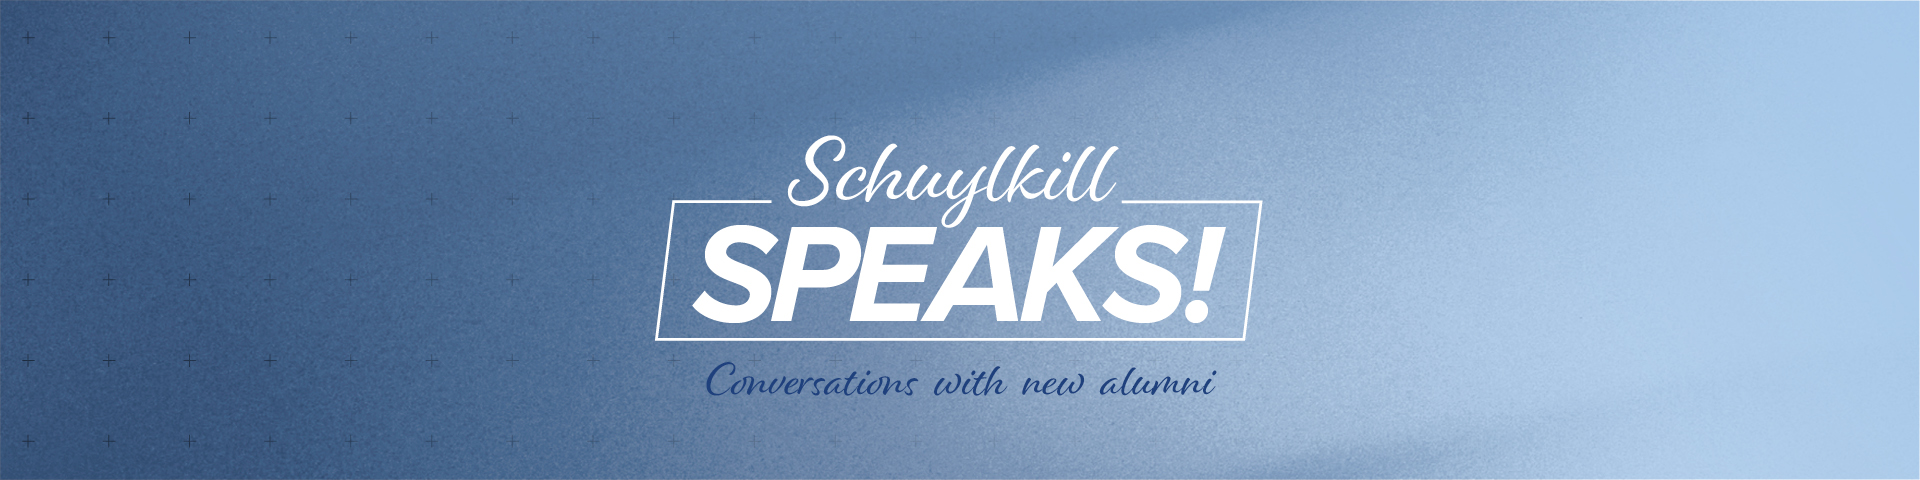 Schuylkill Speaks- Conversations with new alumni graphic